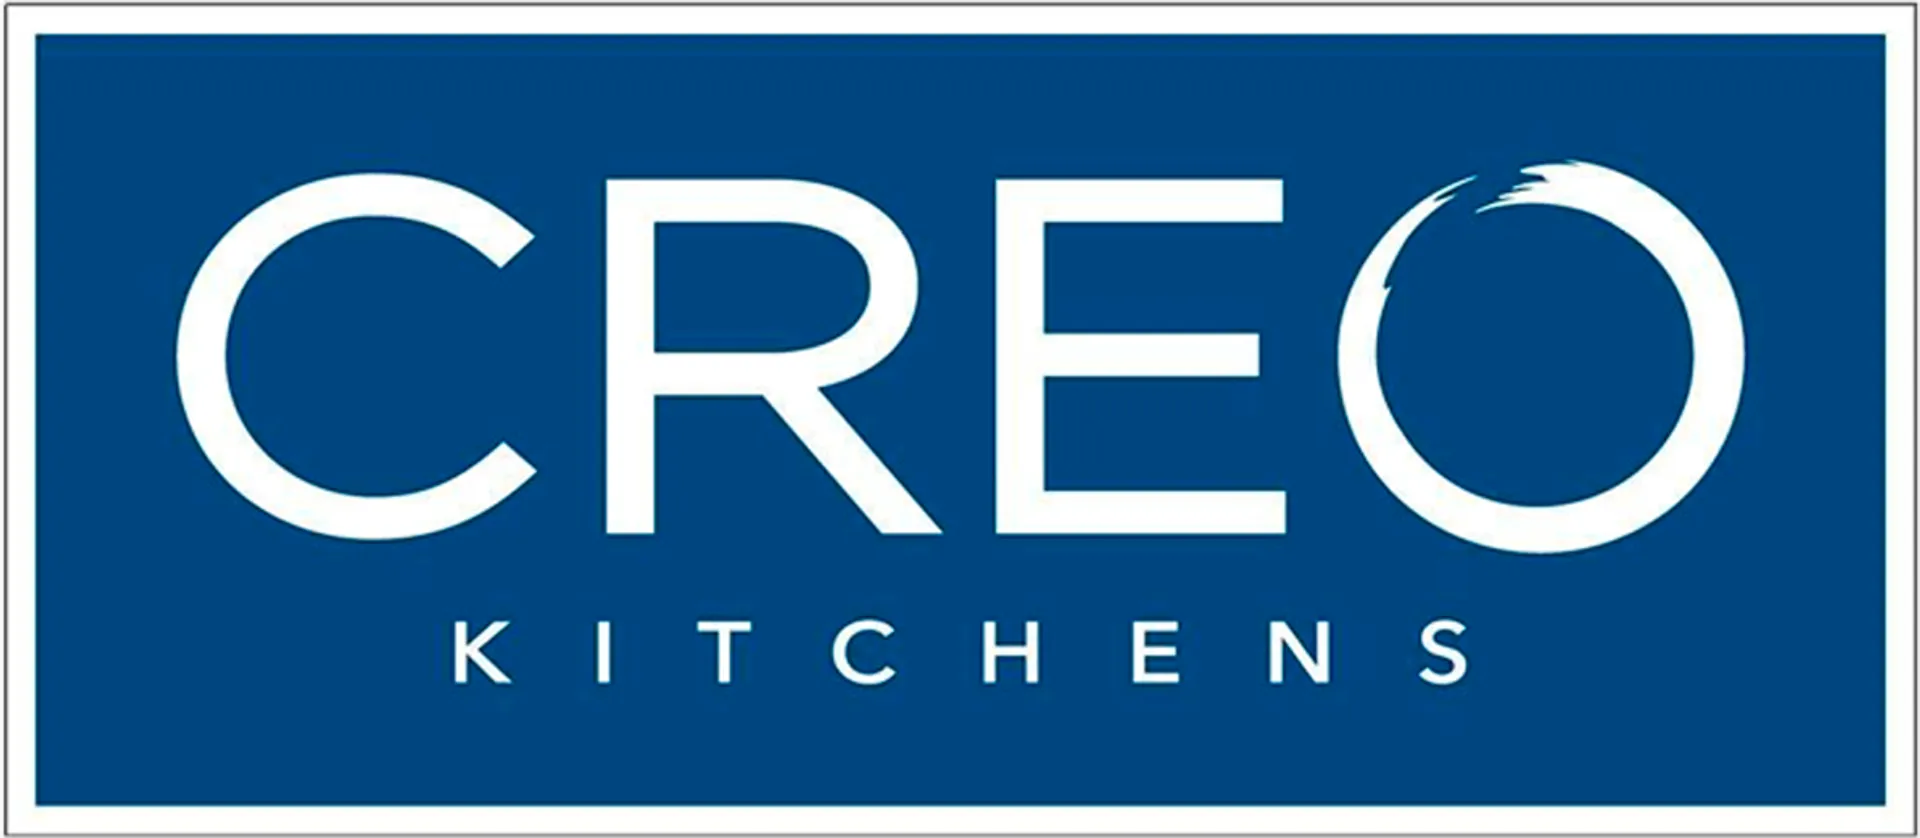 CREO KITCHEN logo